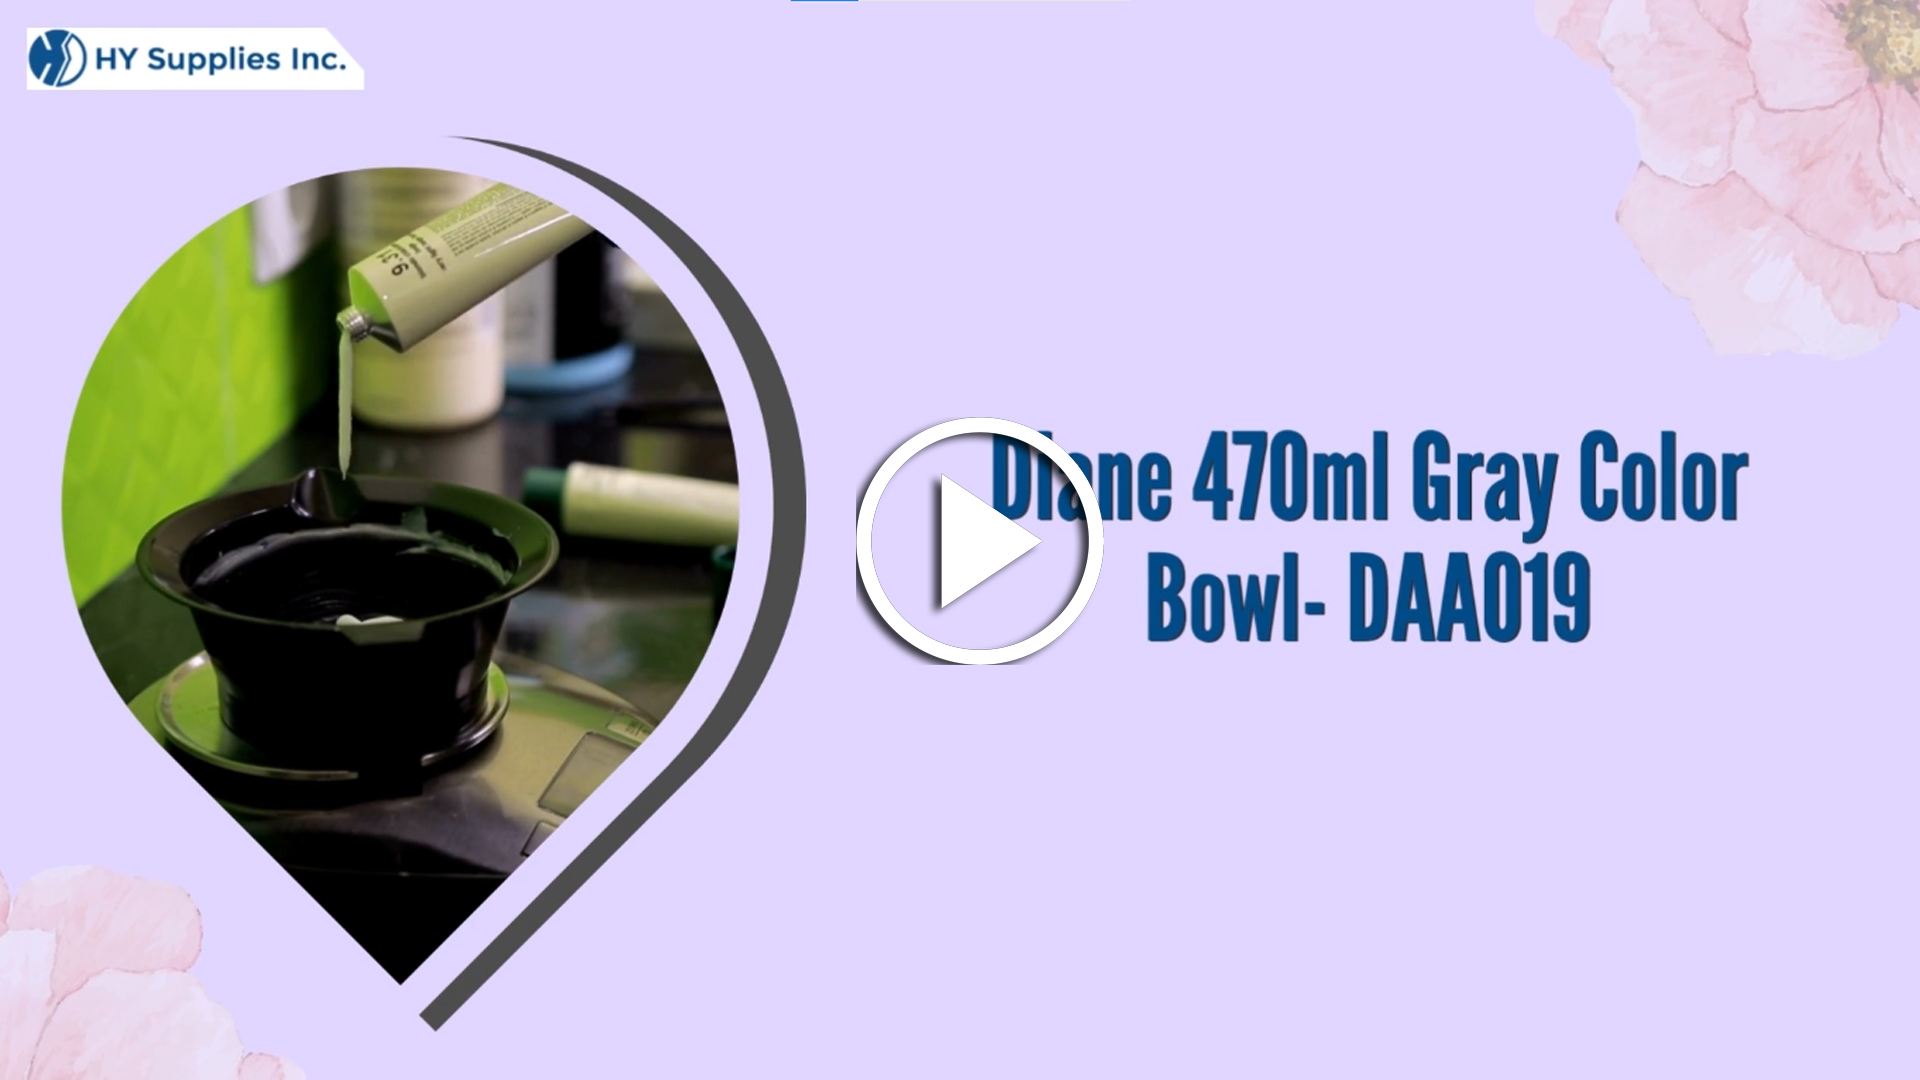 Diane 470ml Gray Color Bowl- DAA019